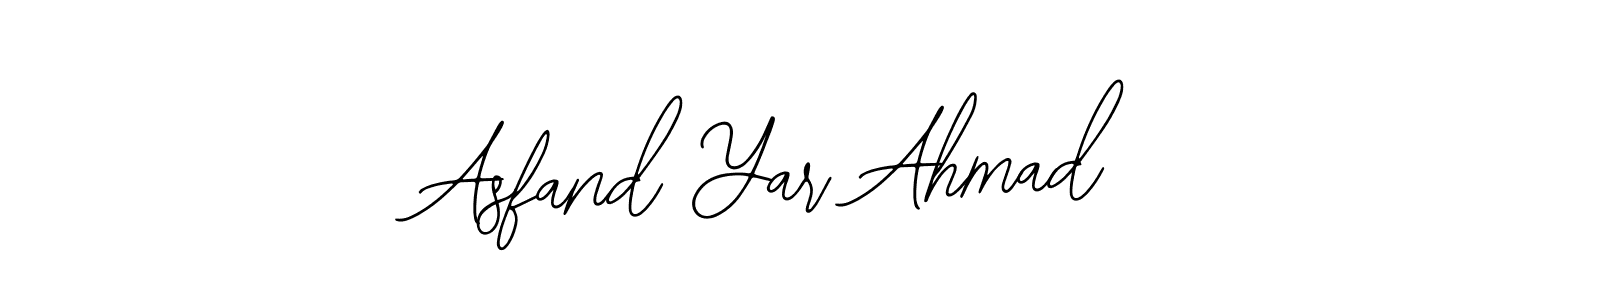 How to make Asfand Yar Ahmad signature? Bearetta-2O07w is a professional autograph style. Create handwritten signature for Asfand Yar Ahmad name. Asfand Yar Ahmad signature style 12 images and pictures png